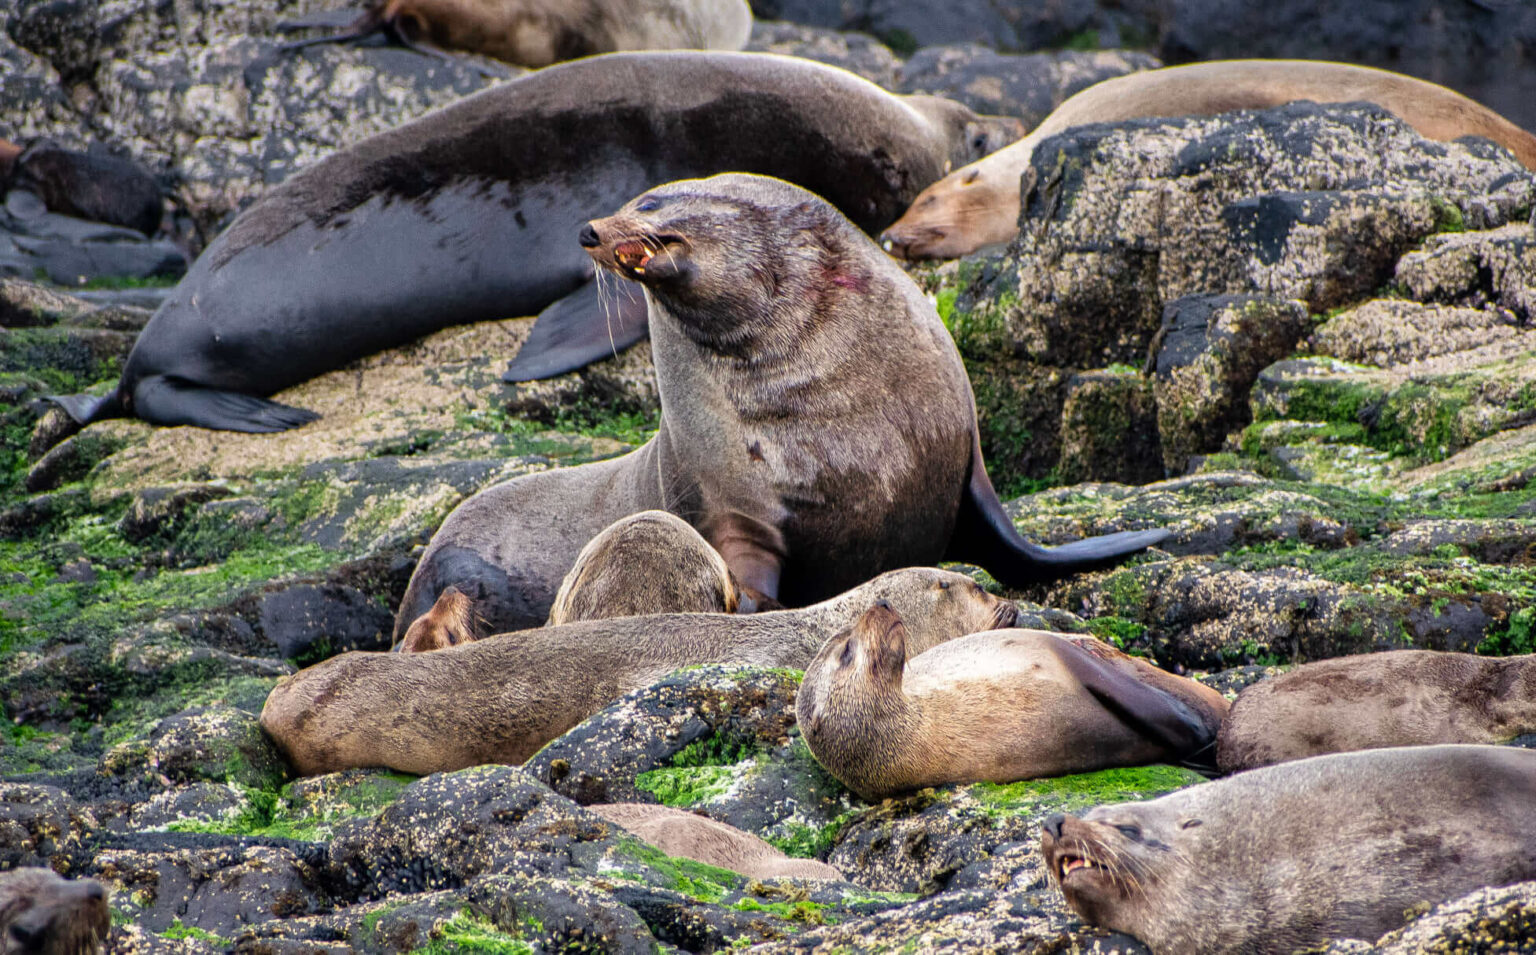 phillip island seal cruise deals